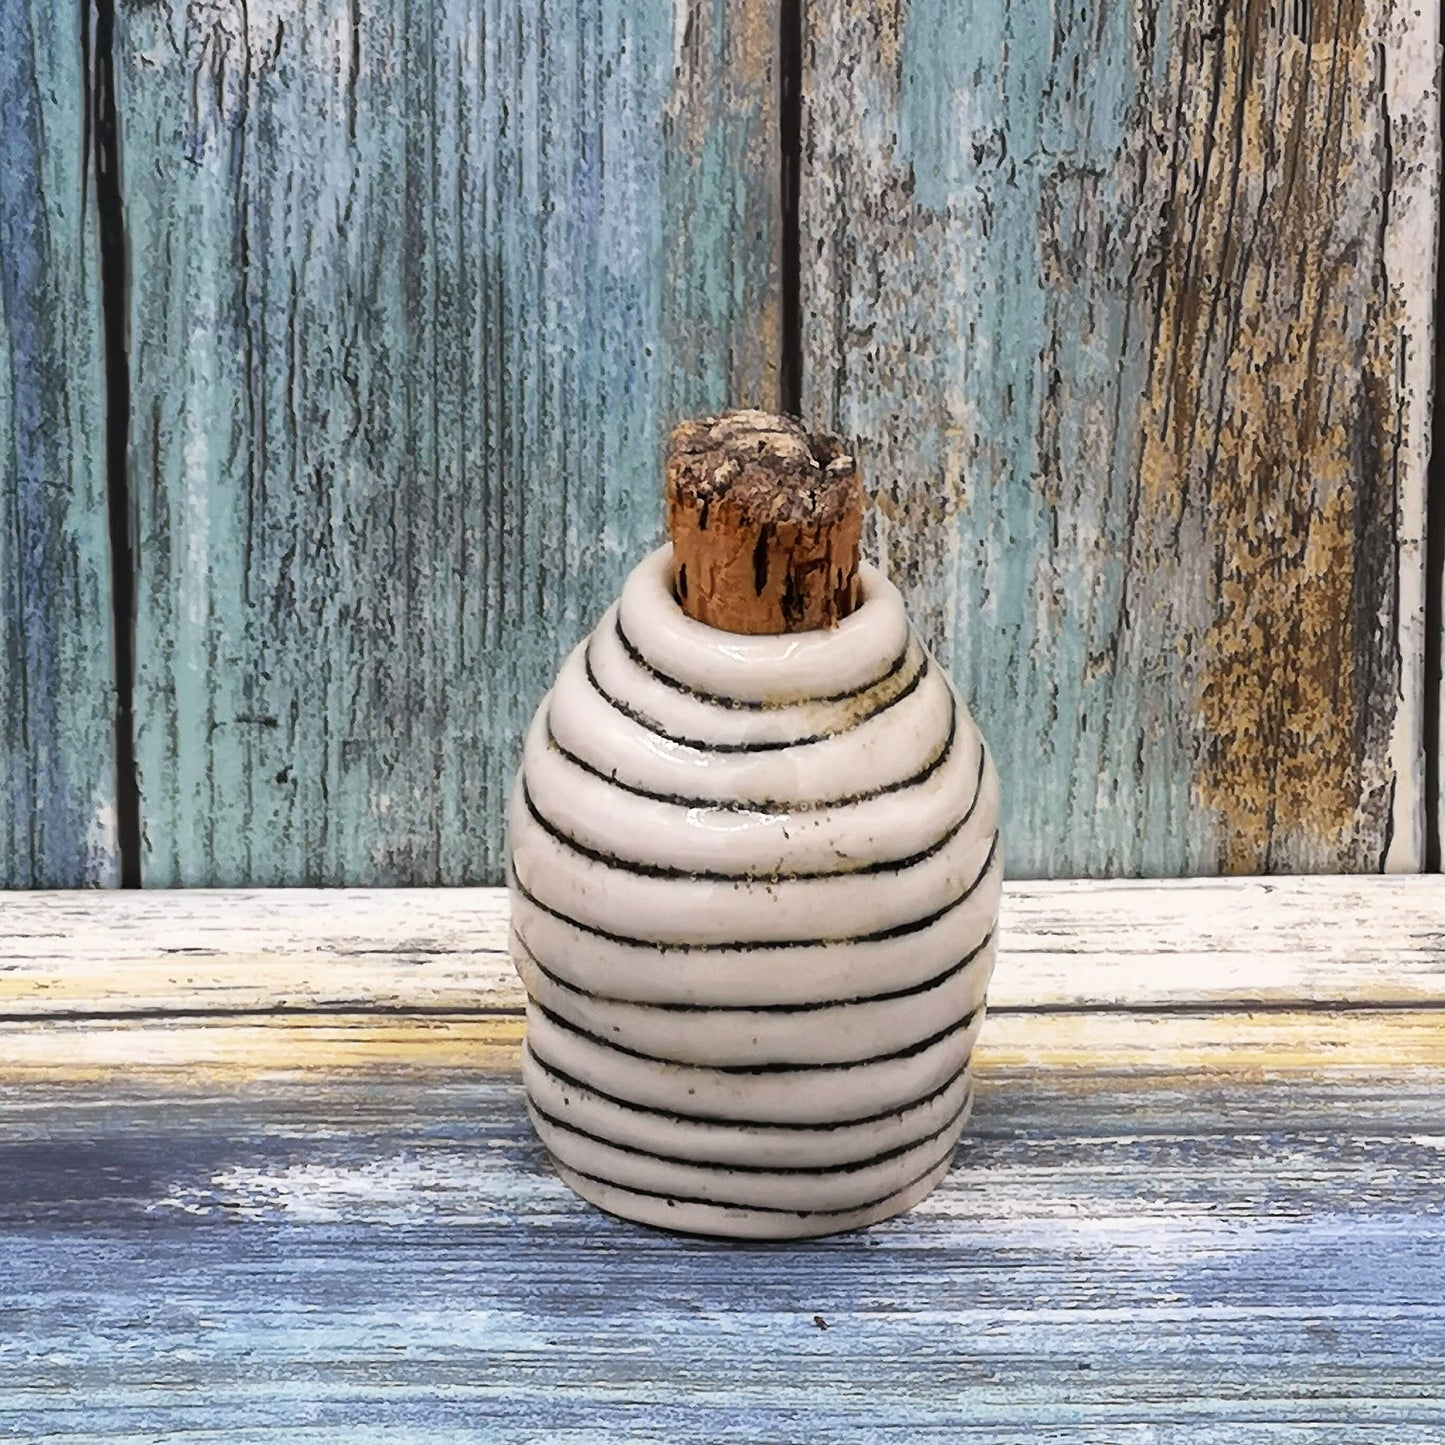 MINIATURE BOTTLE, SMALL Ceramic Bottle With Cork Stopper, Mini Bottles, Handmade Pottery Vase, 9th anniversary gift for wife, mom birthday - Ceramica Ana Rafael